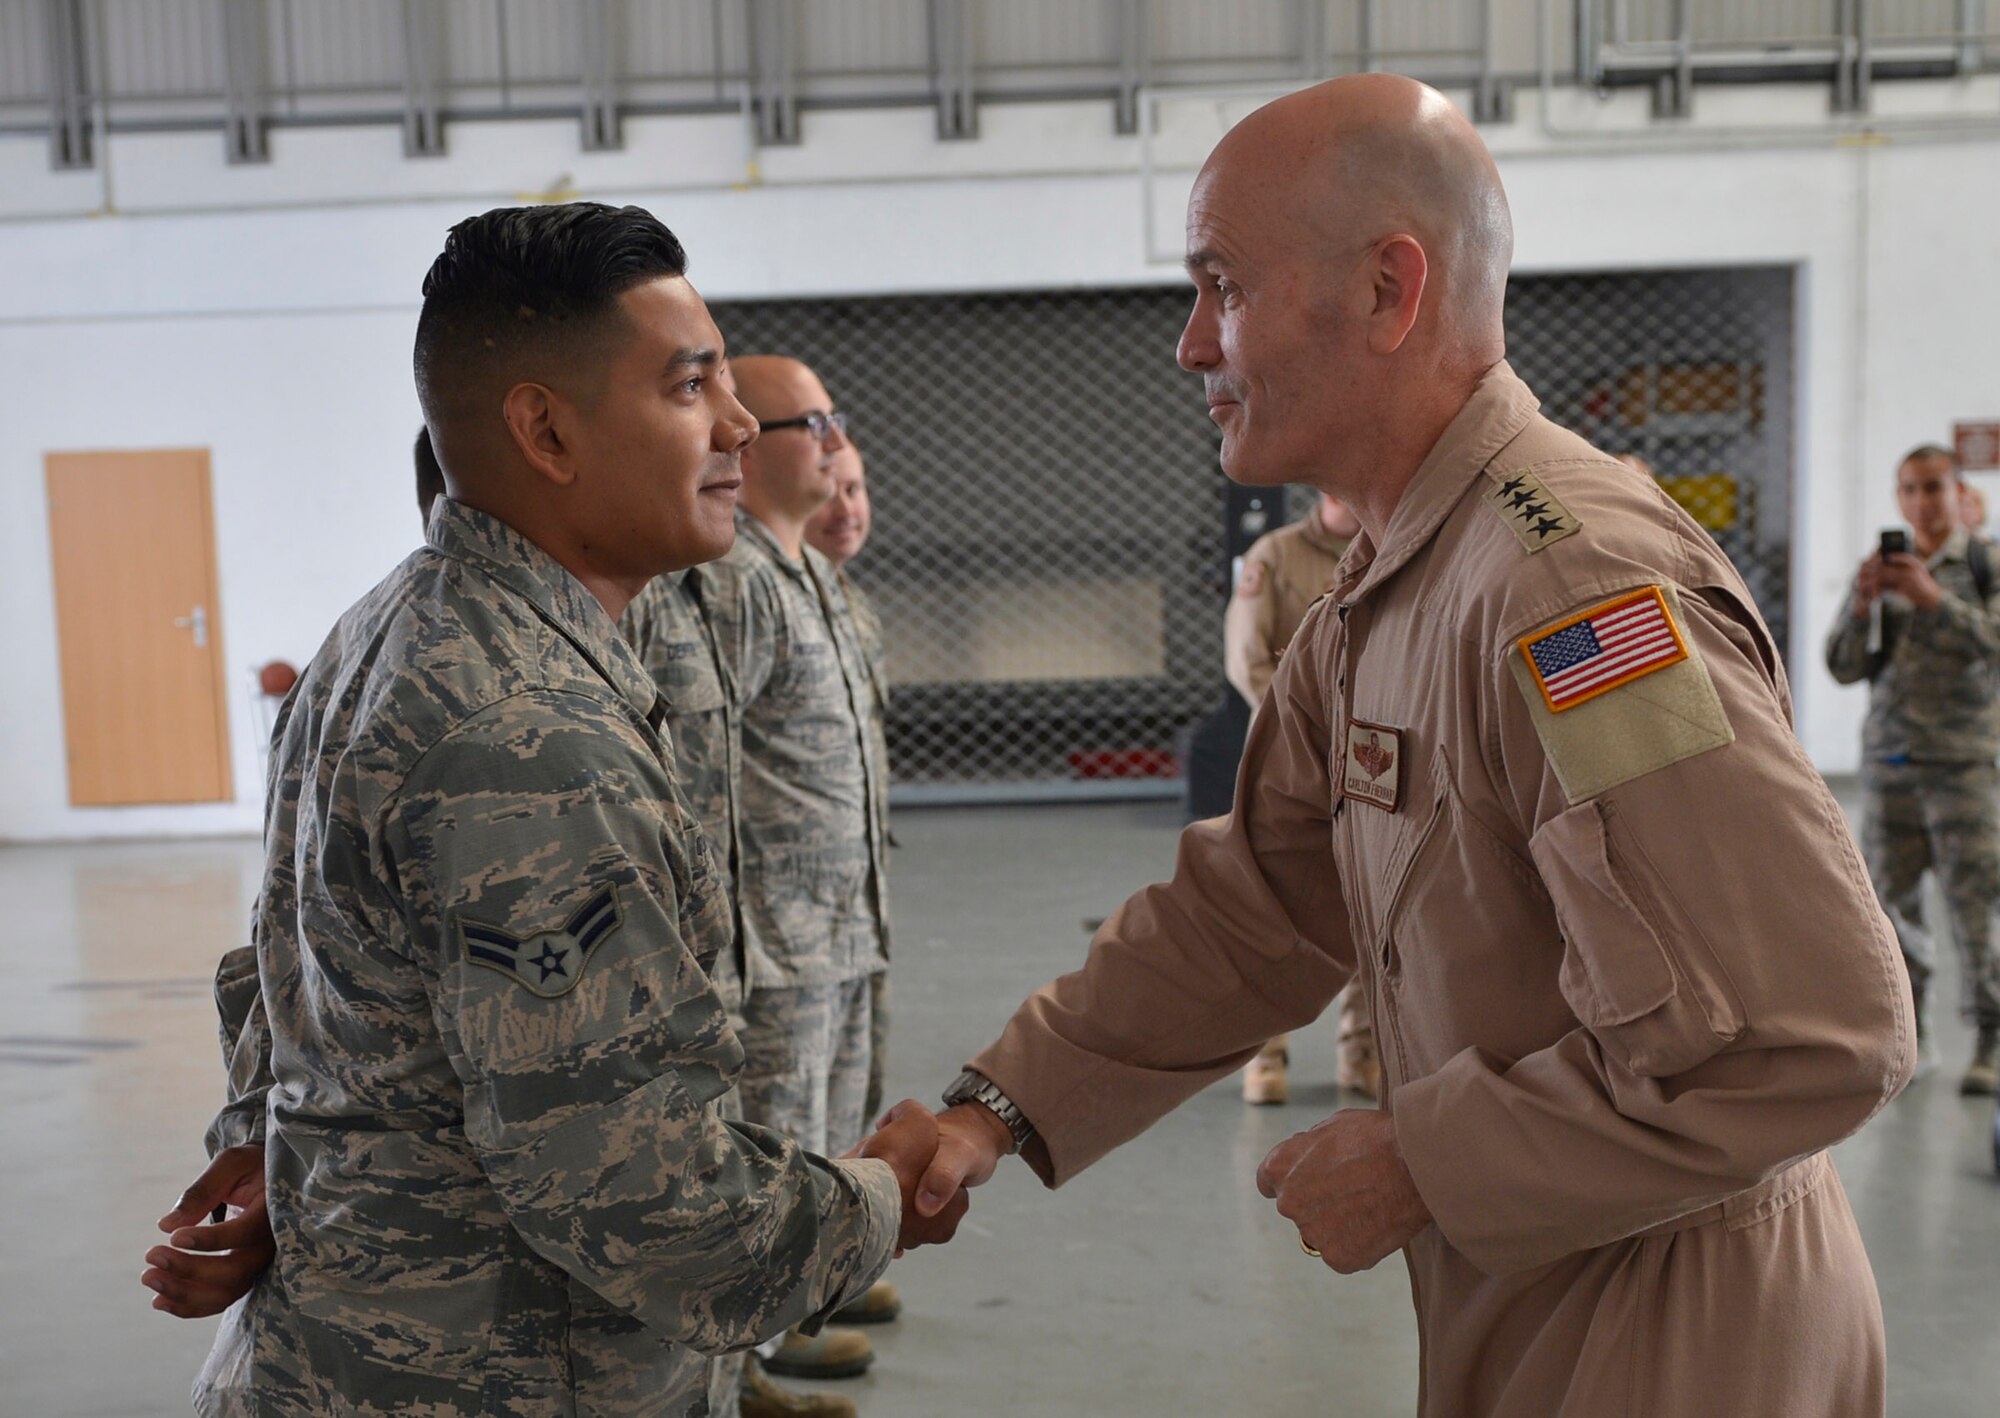 General shakes Airman's hand